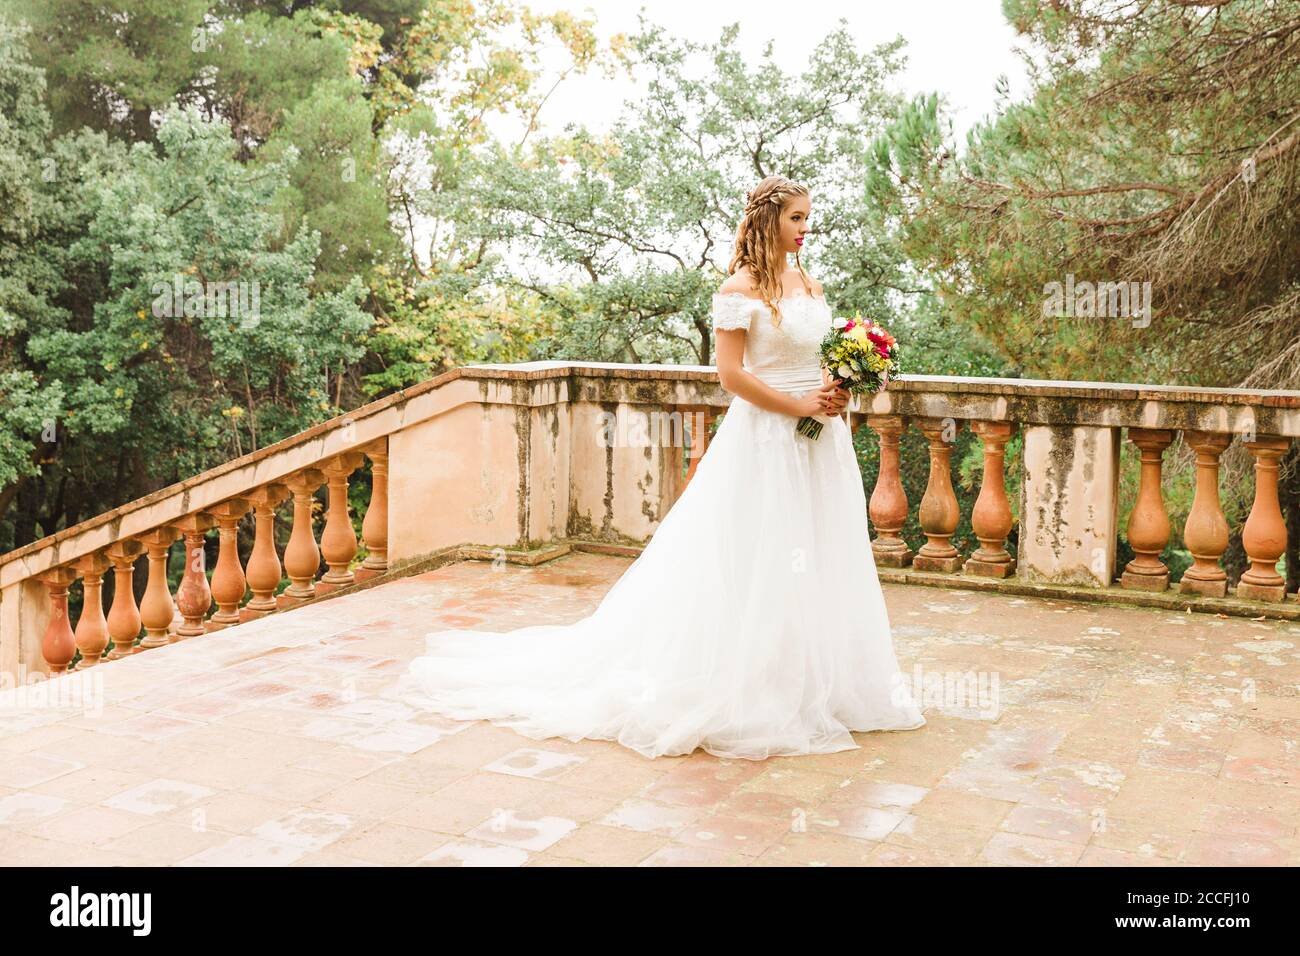 Bride, wedding, garden, young woman, wedding dress, stairs, landscape format Stock Photo